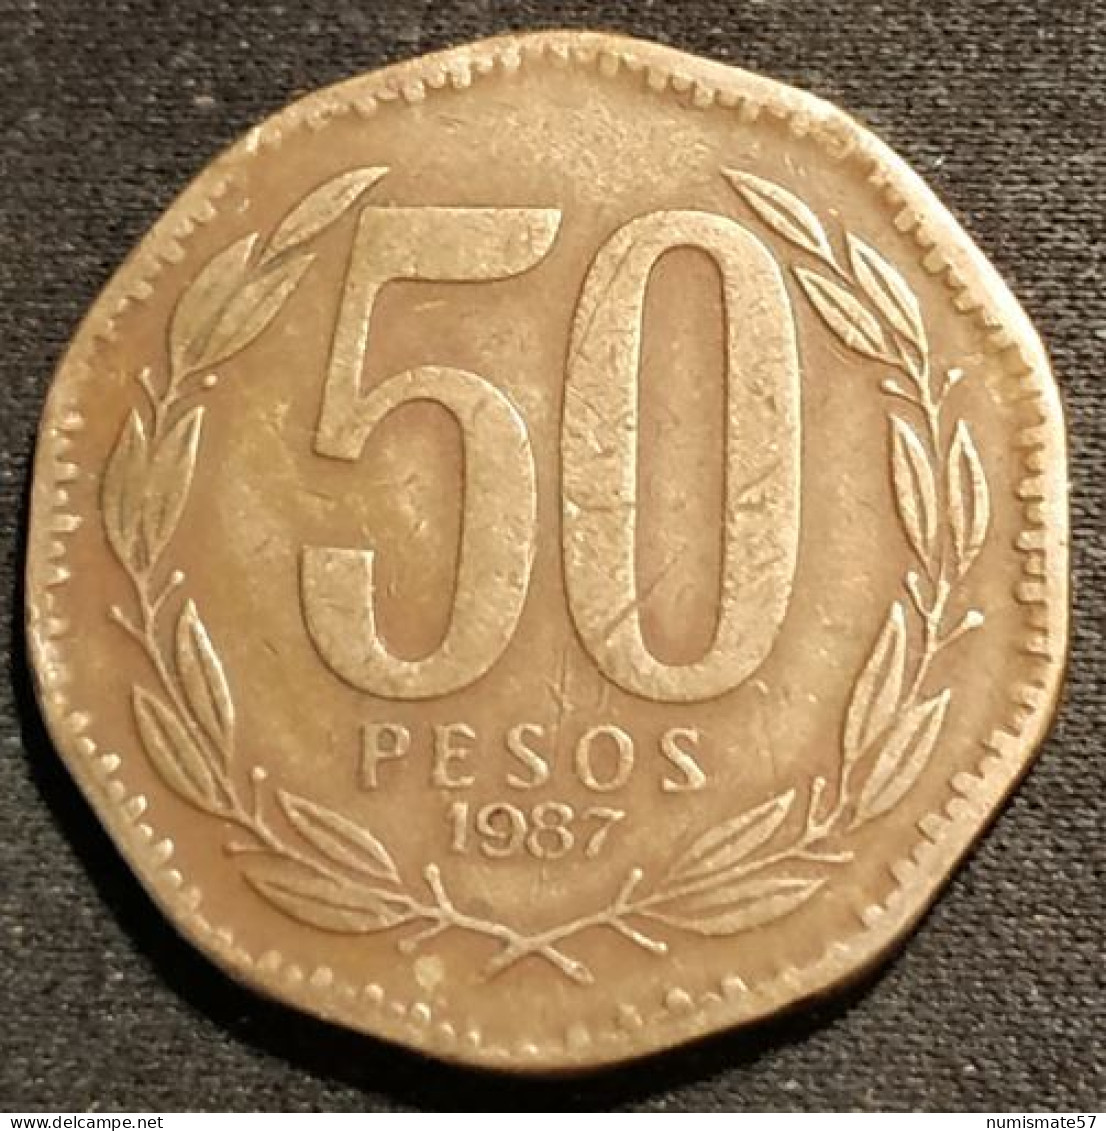 CHILI - CHILE - 50 PESOS 1987 - Bernardo O'Higgins Riquelme - KM 219.1 - ( Bronze-aluminium ) - Chile